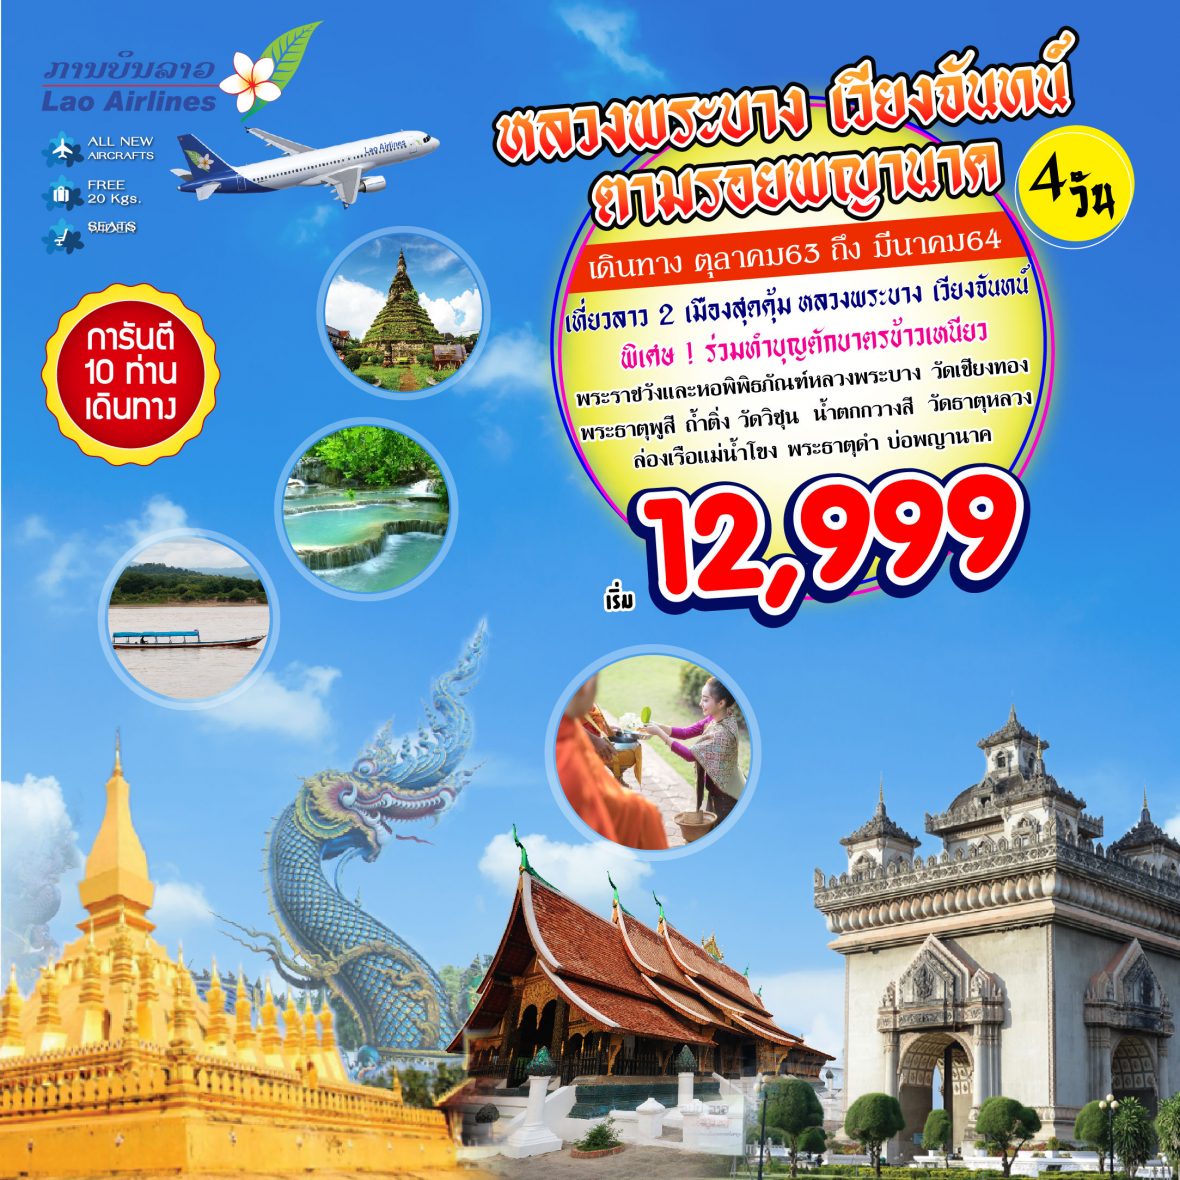 Luang Prabang Vientiane Prayanak_4D_Oct20-Mar21__1040-01